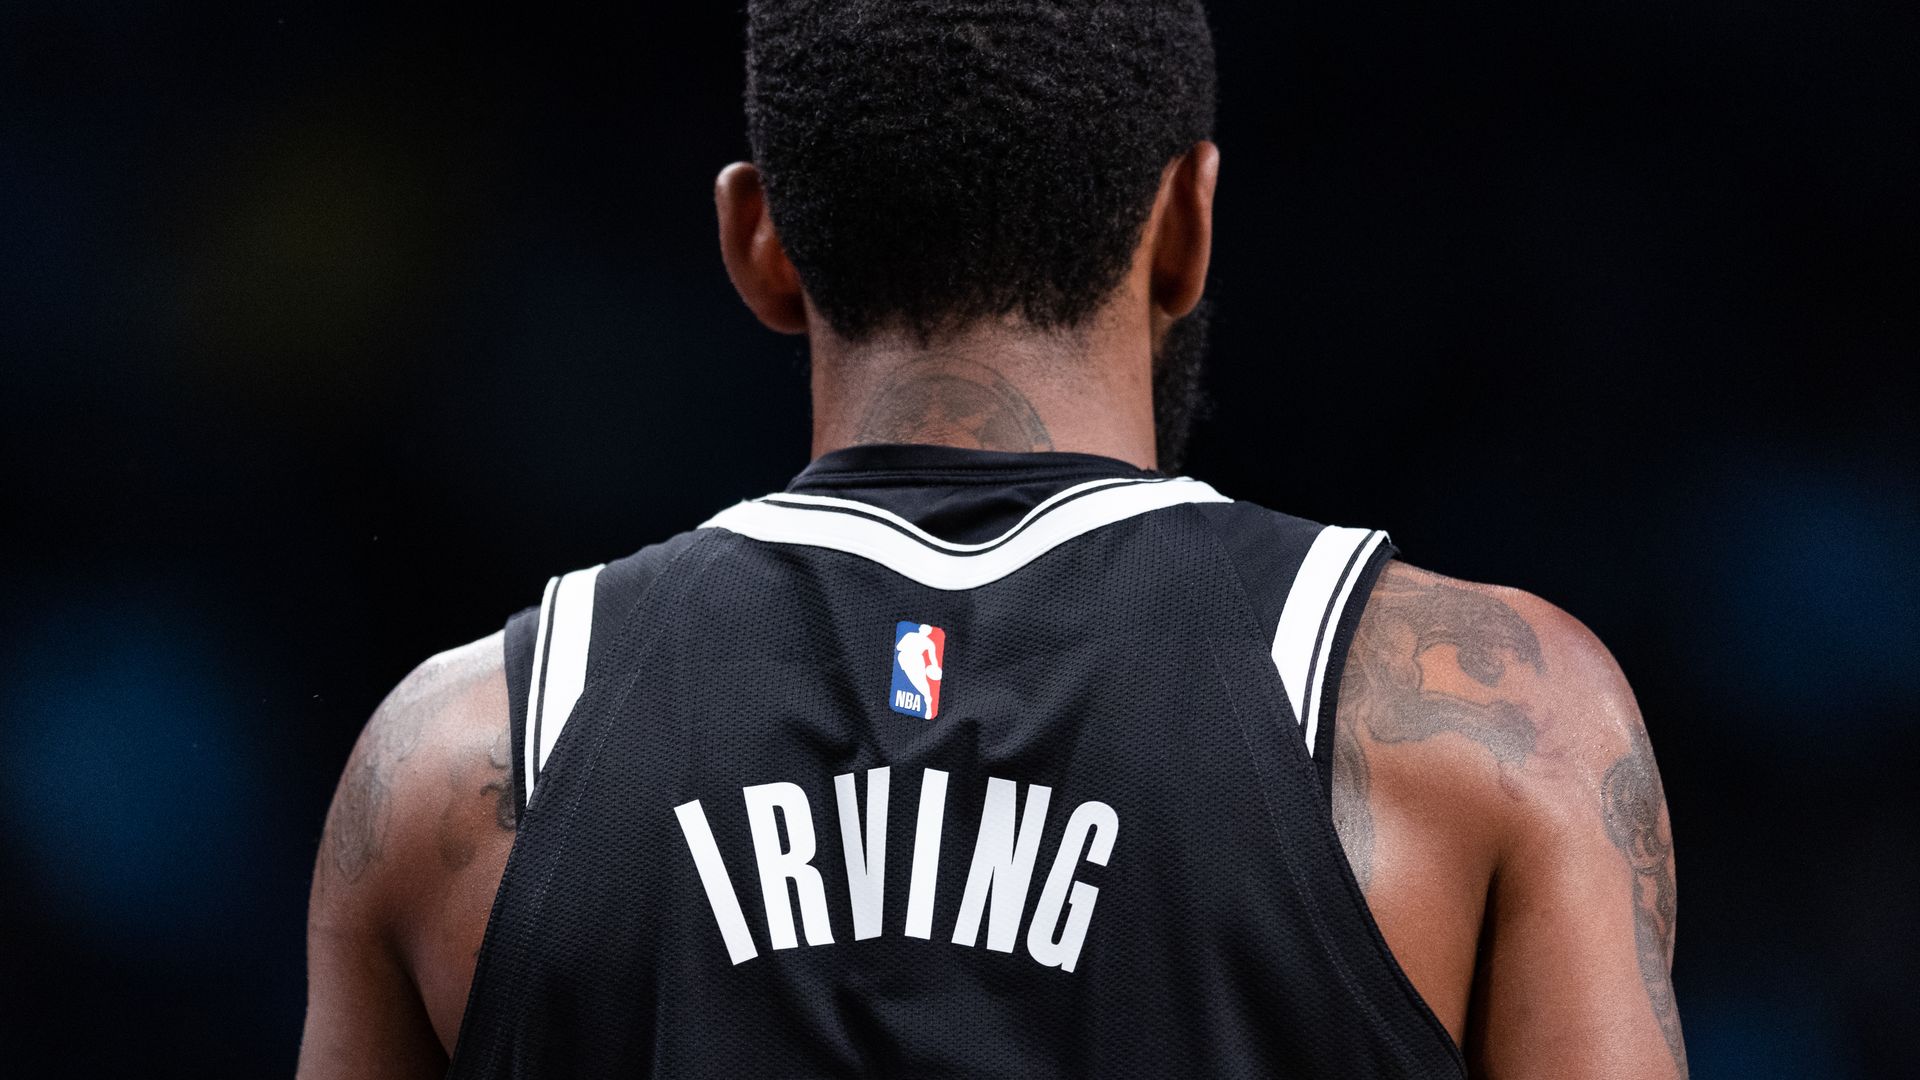 Boys Kyrie Irving NBA Jerseys for sale